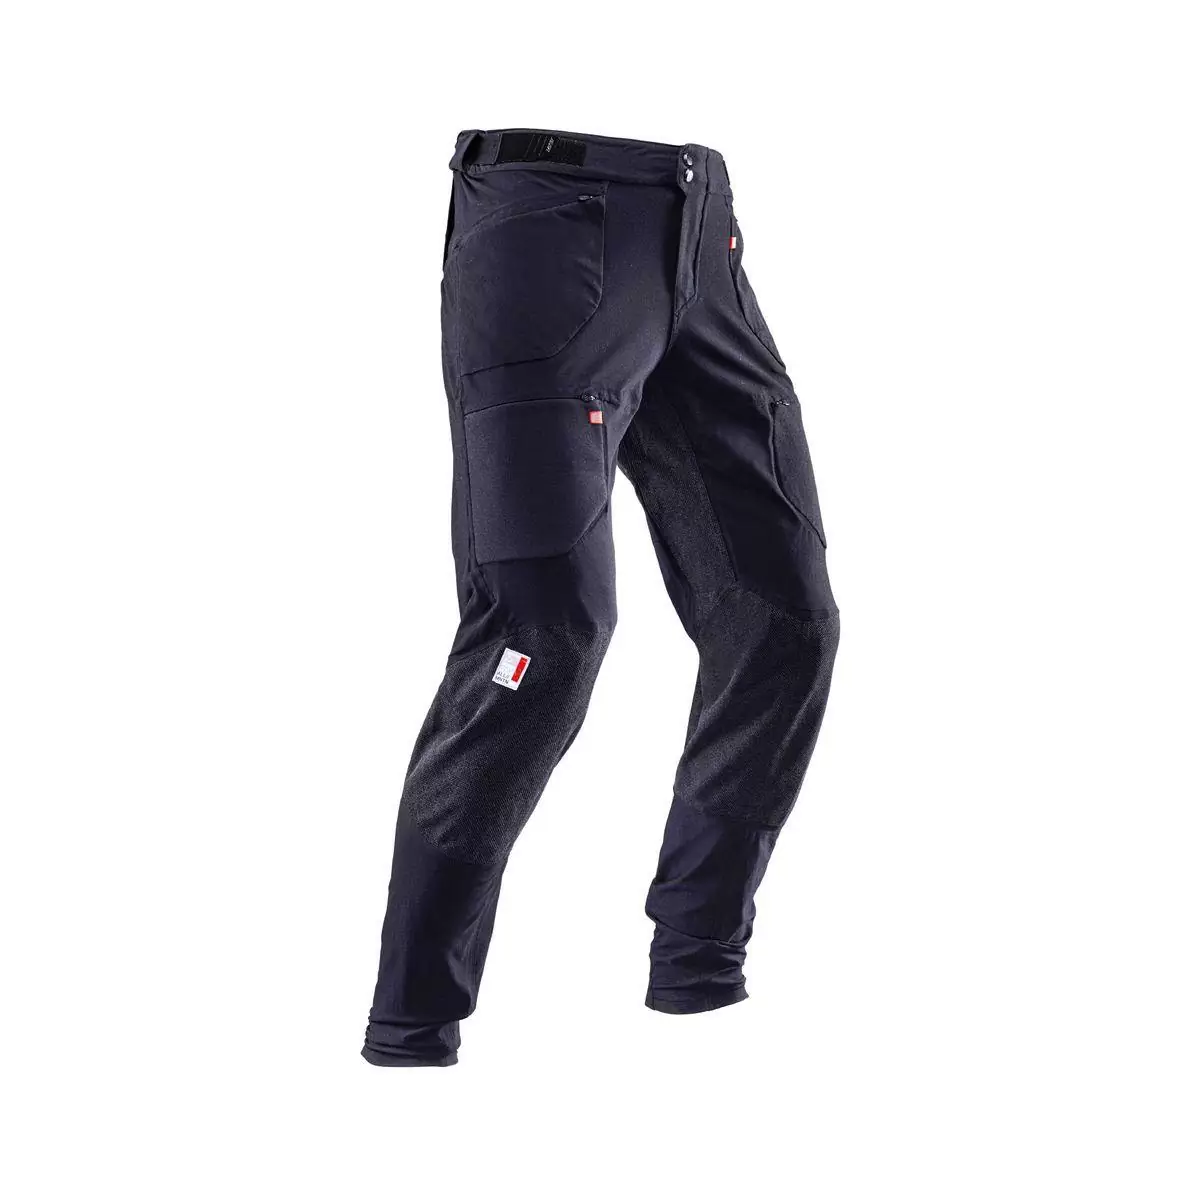 Allmtn 4.0 Long MTB Pants Black Size M #2